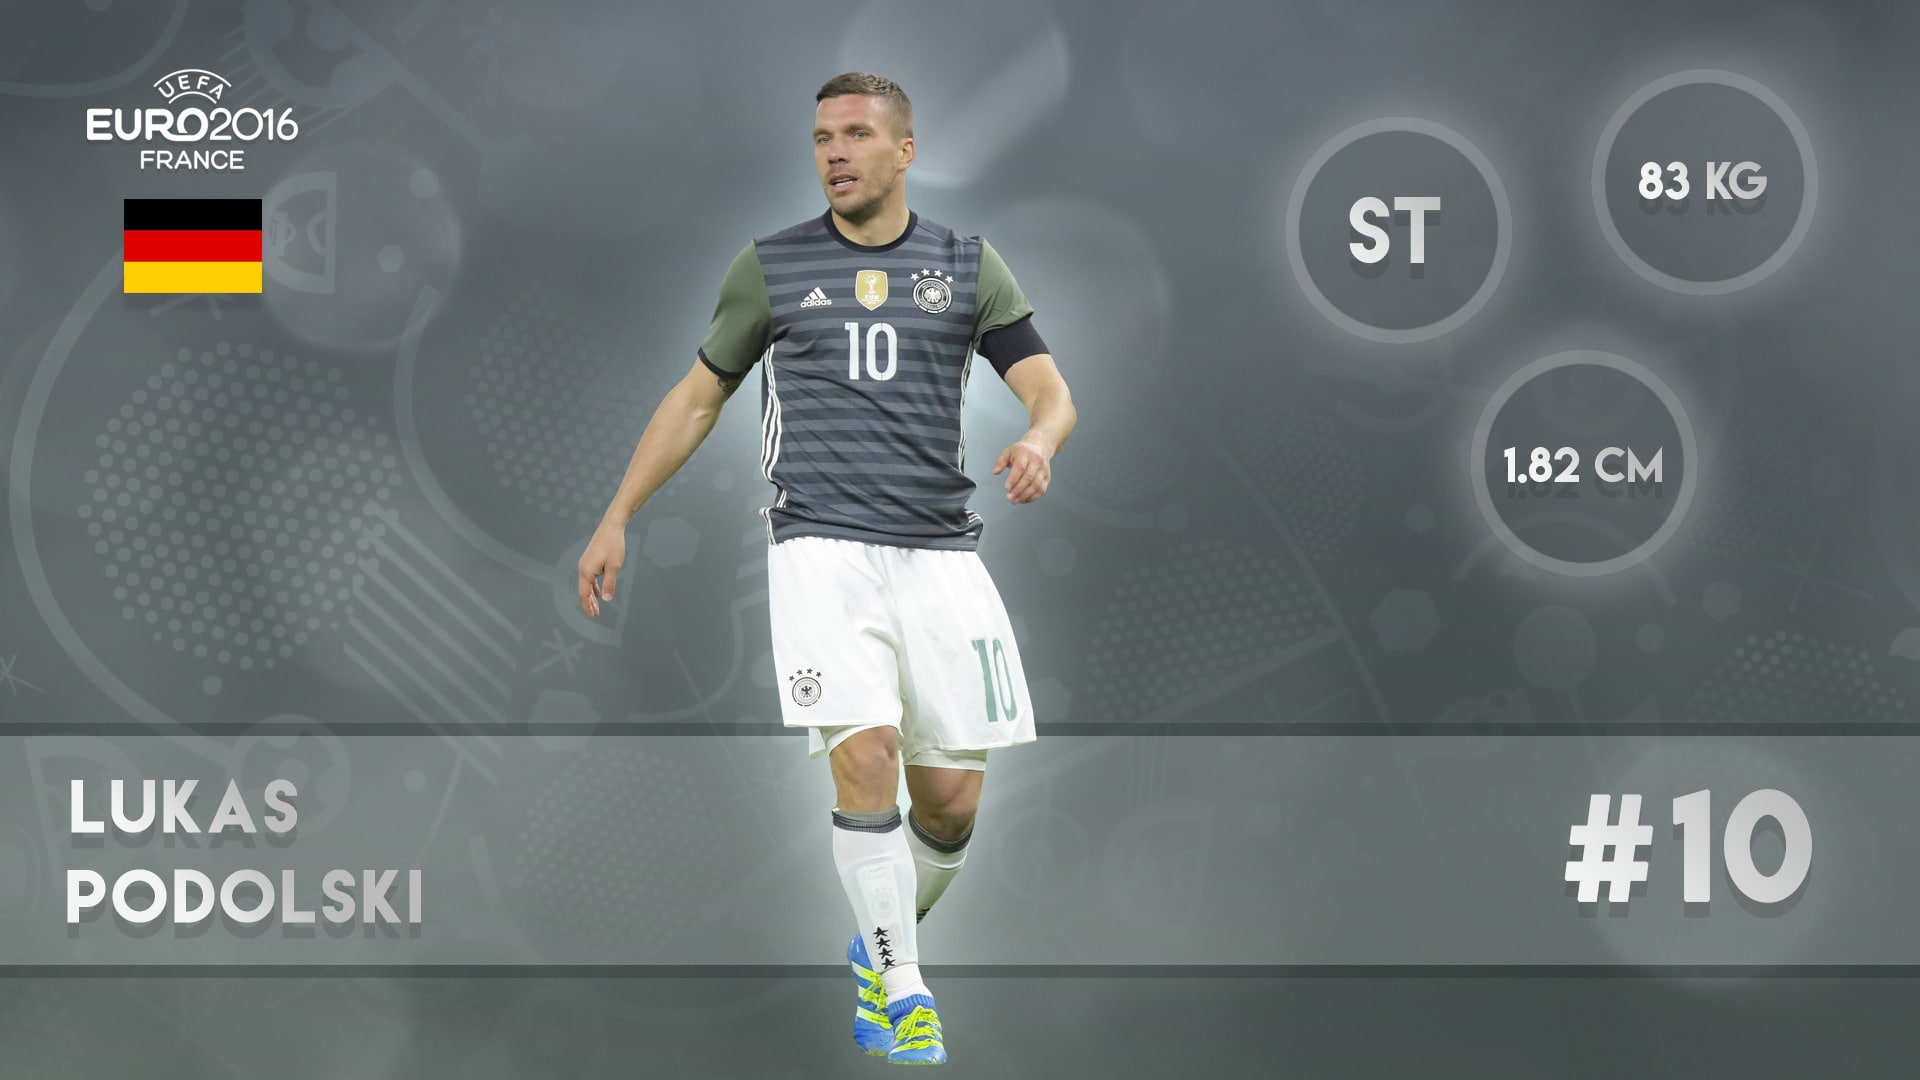 Lukas Podolski-UEFA Euro 2016 Player Wallpaper, technology, one person